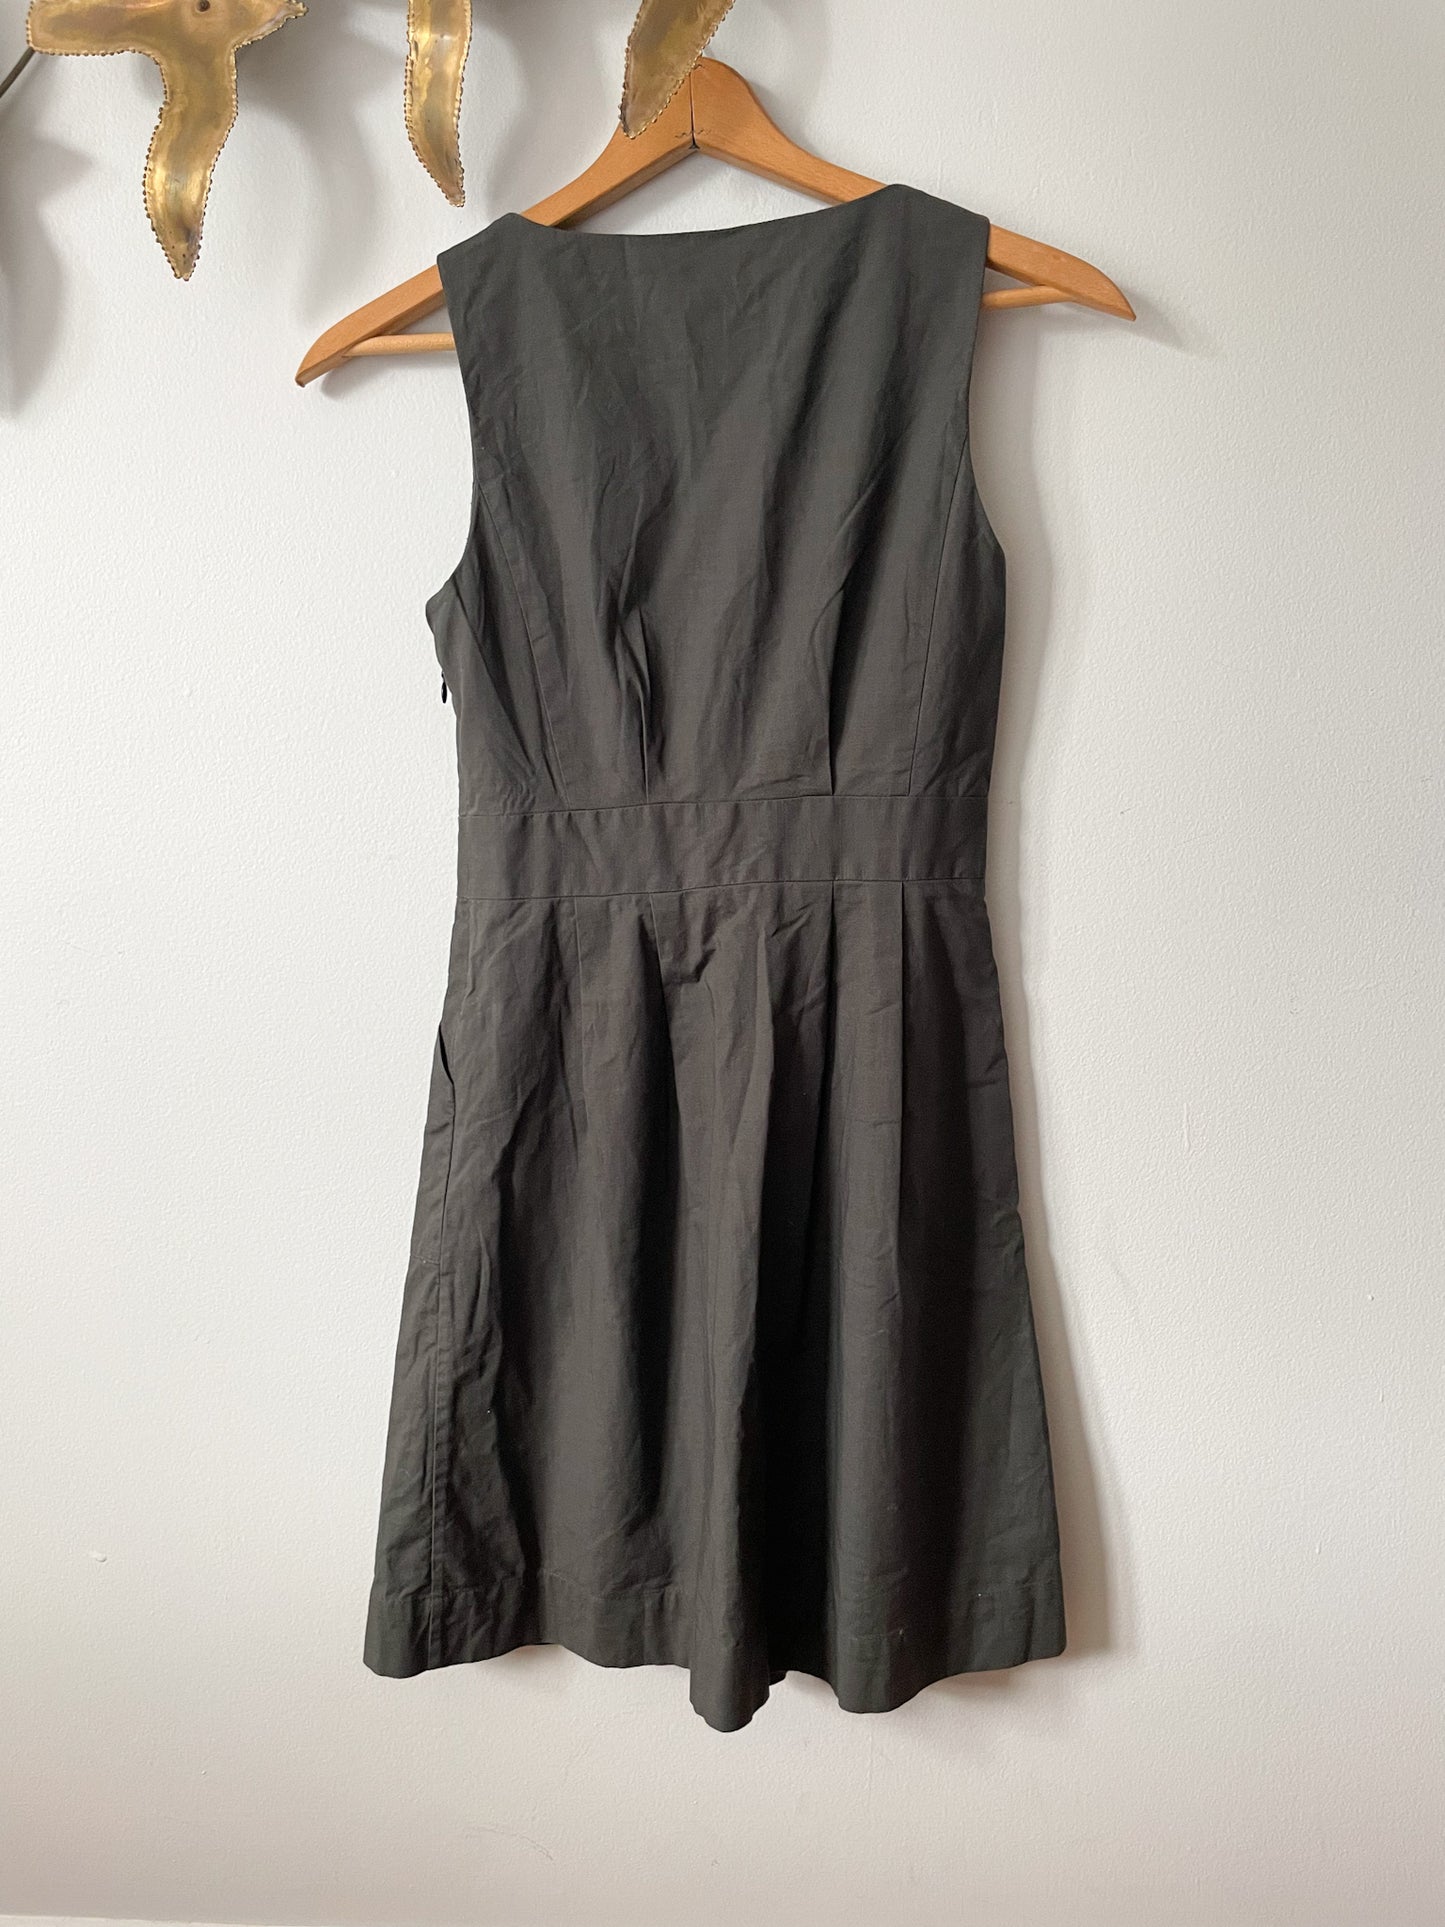 J. Crew Grey 100% Cotton Fit Flare Dress - Size 00